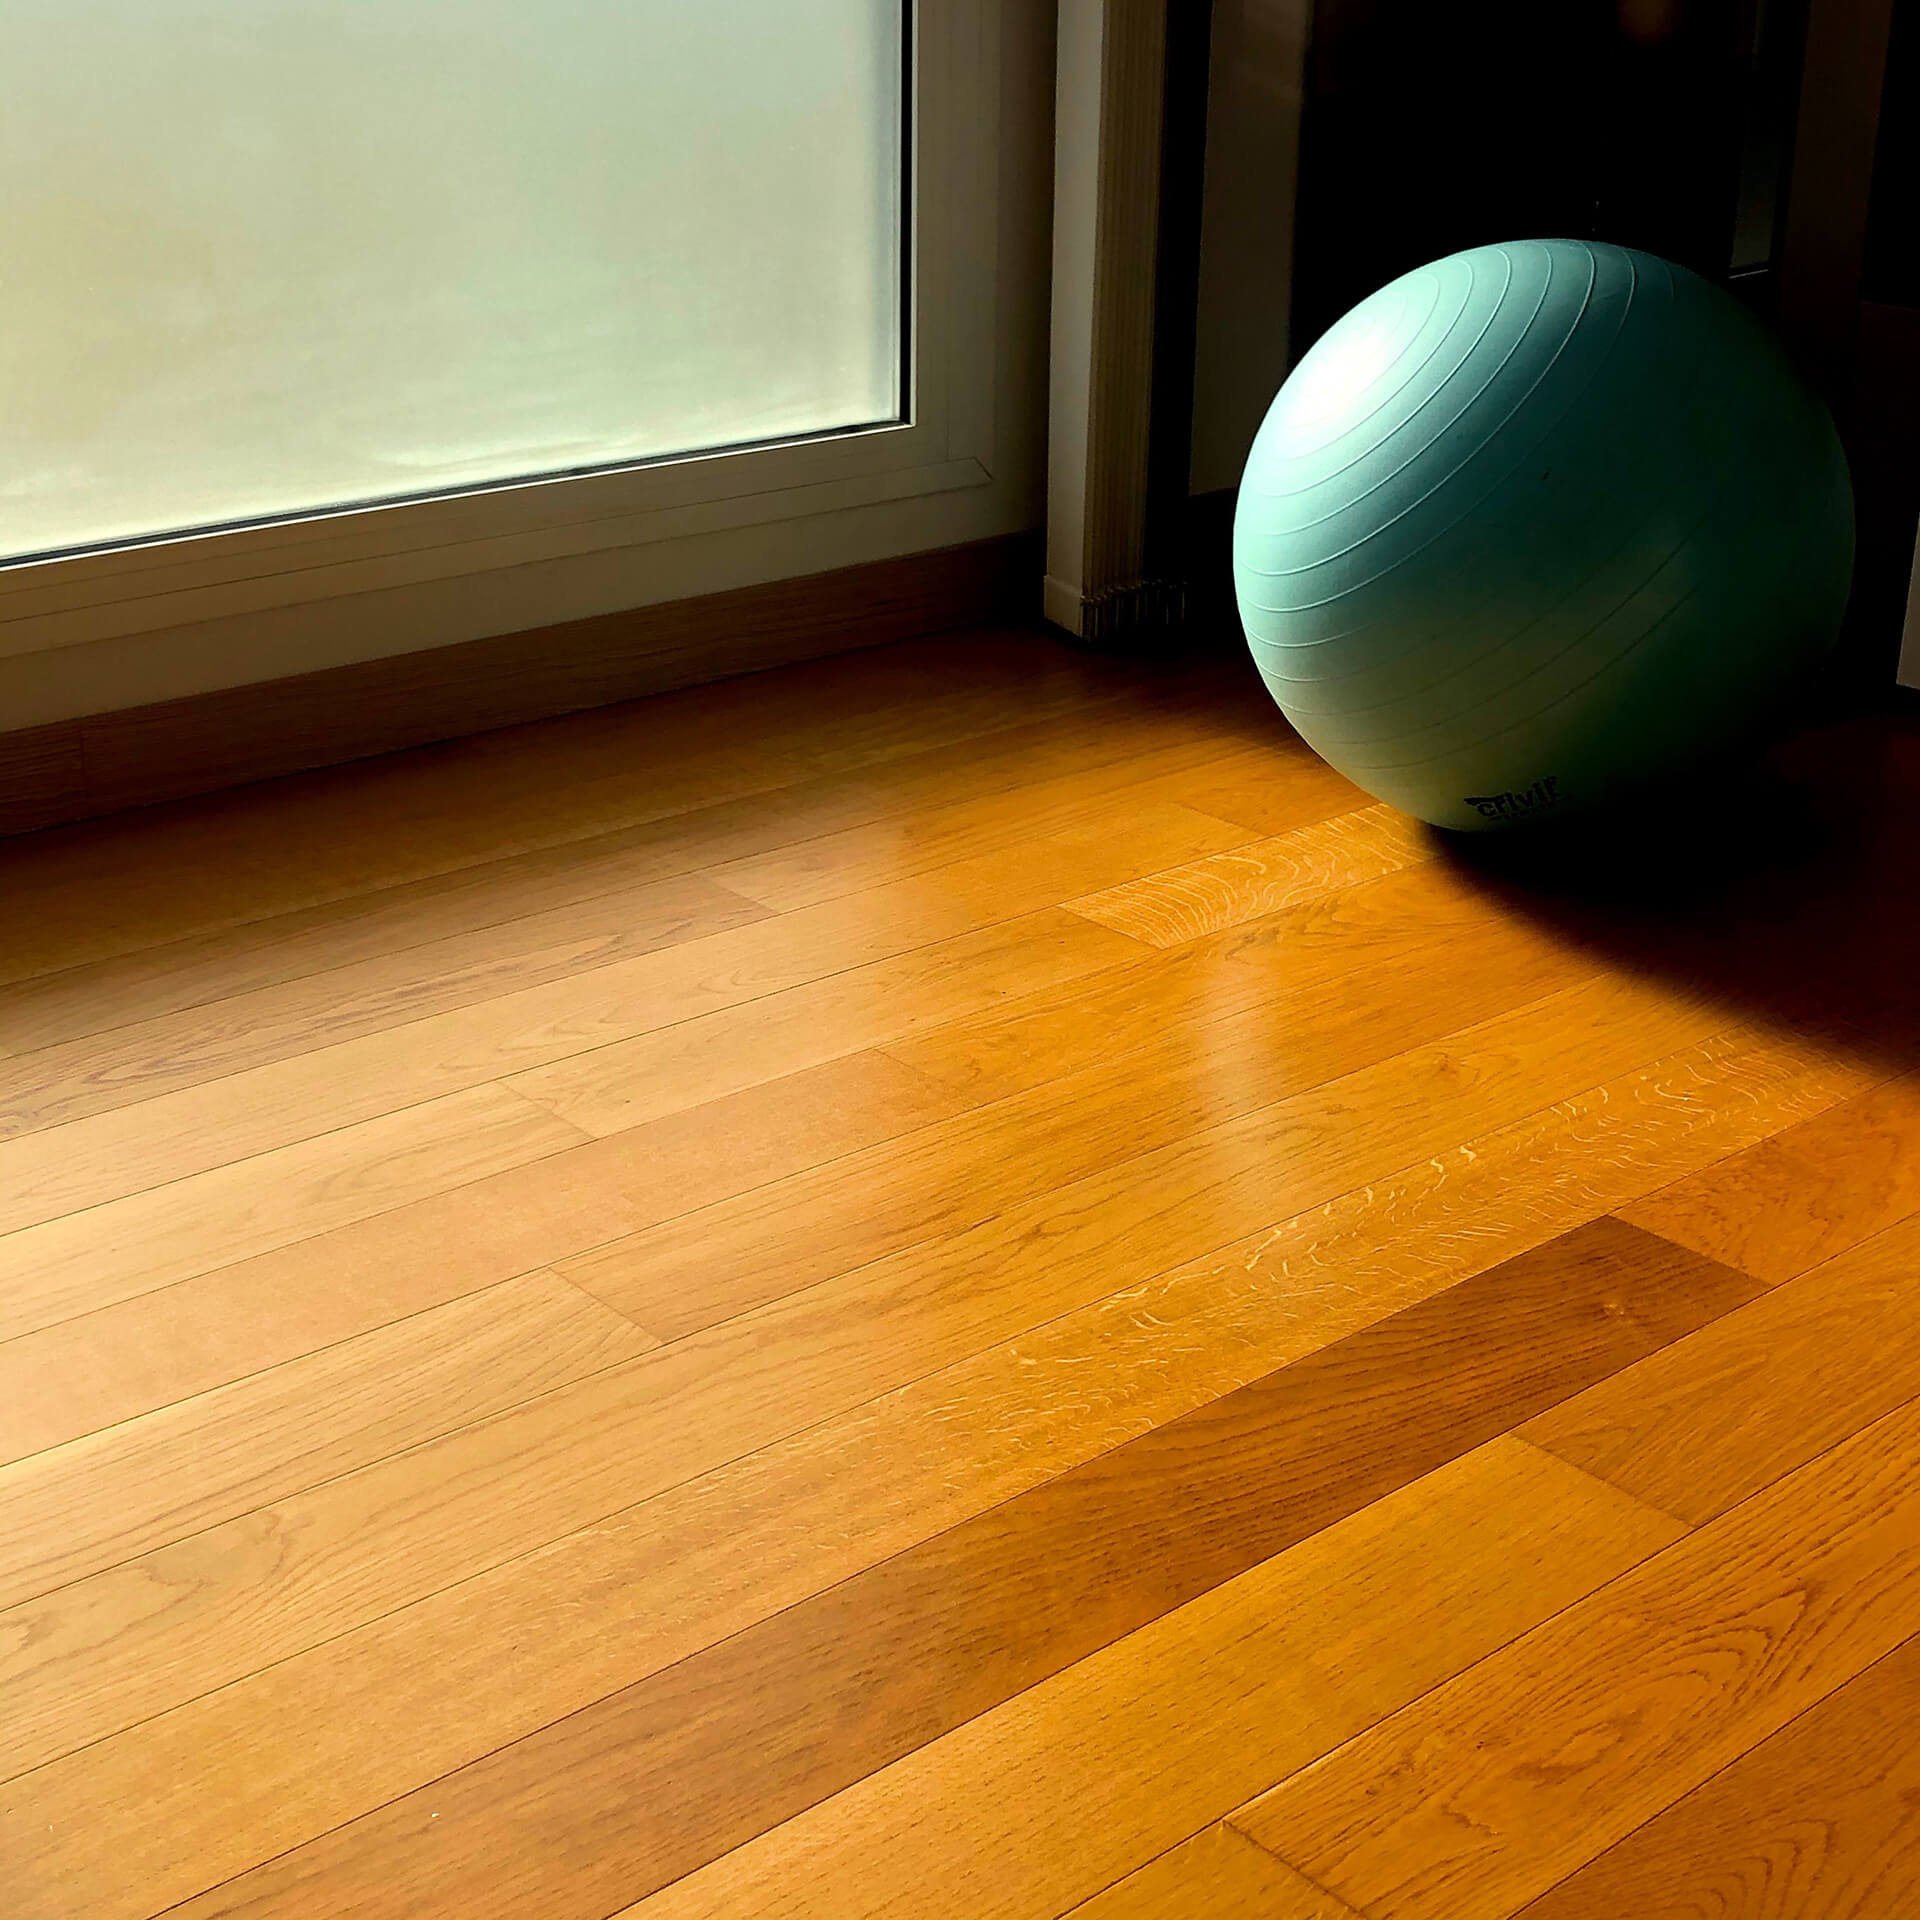 Luxurious wooden floors